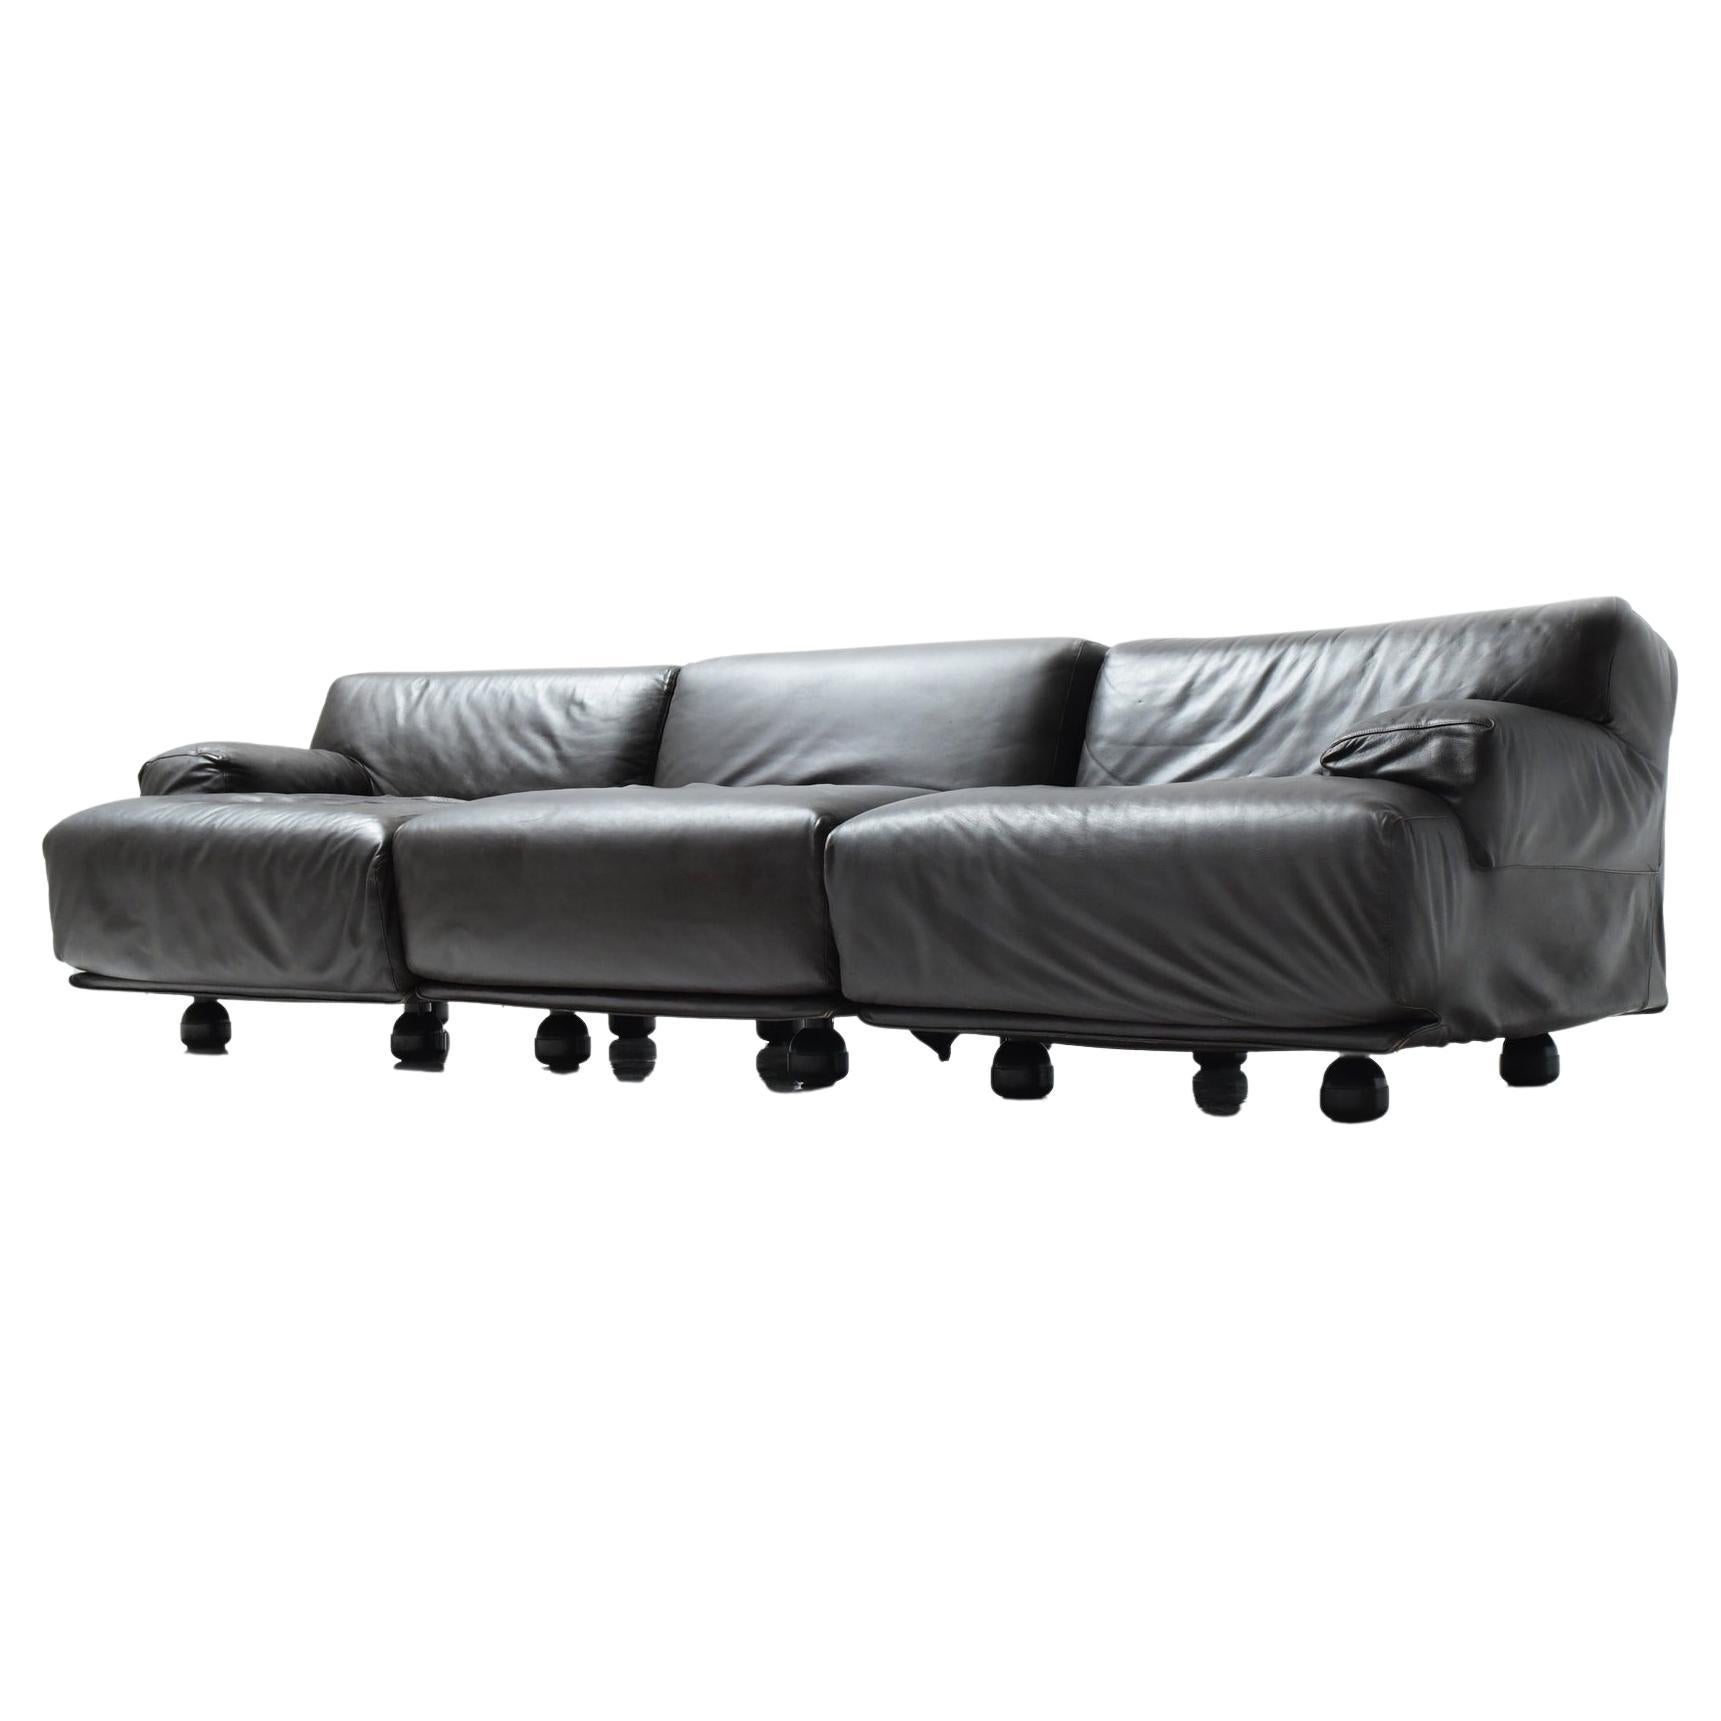 Modulares Fiandra-Sofa aus Leder von Vico Magistretti für Cassina, Italien im Angebot